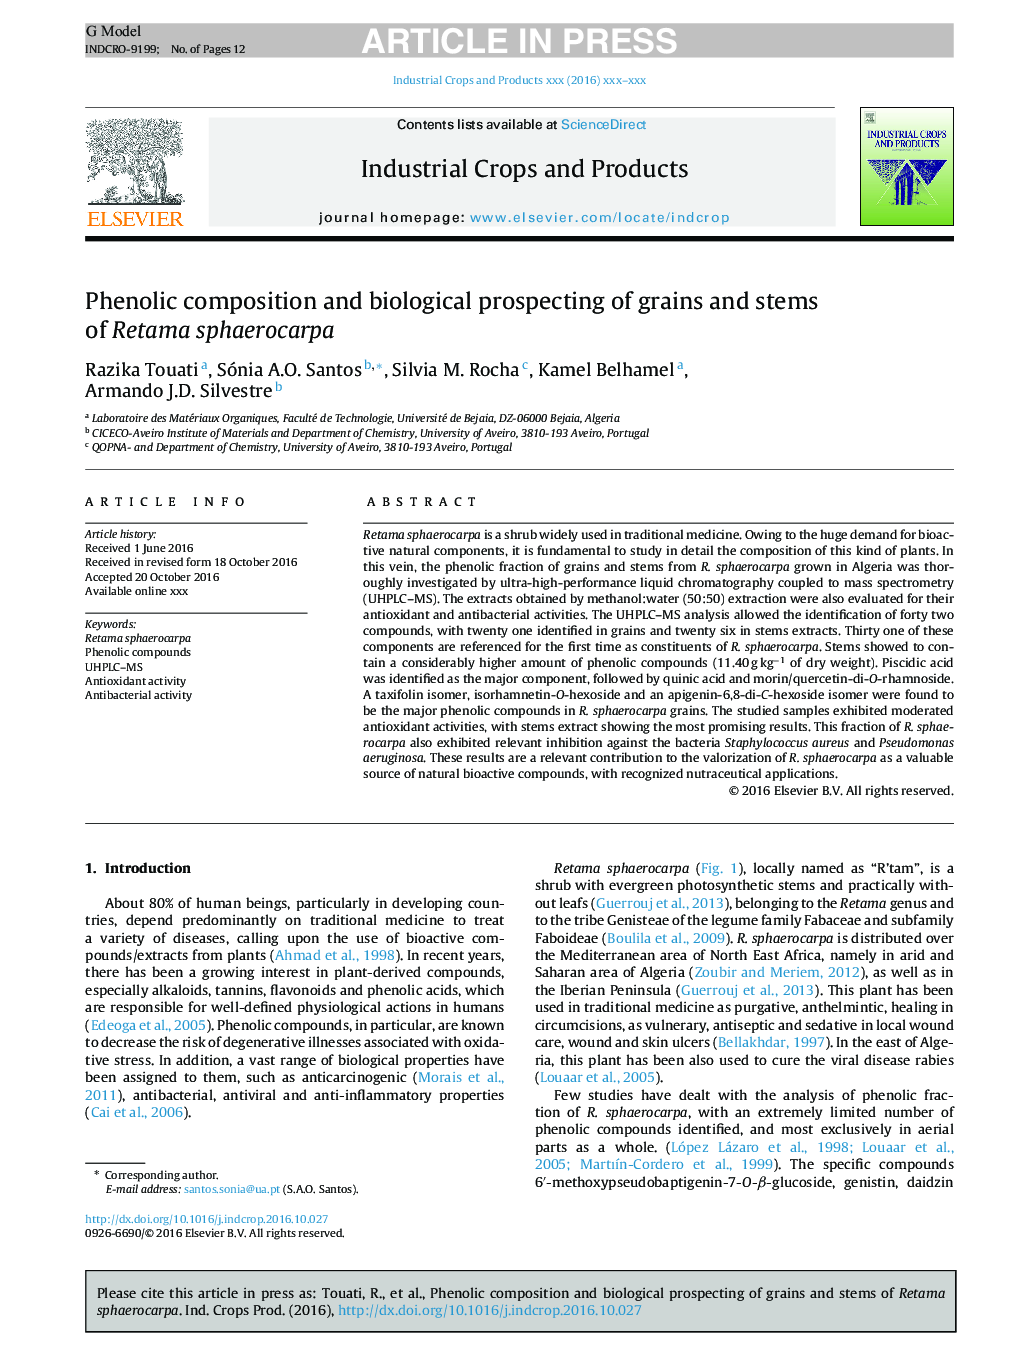 Phenolic composition and biological prospecting of grains and stems of Retama sphaerocarpa